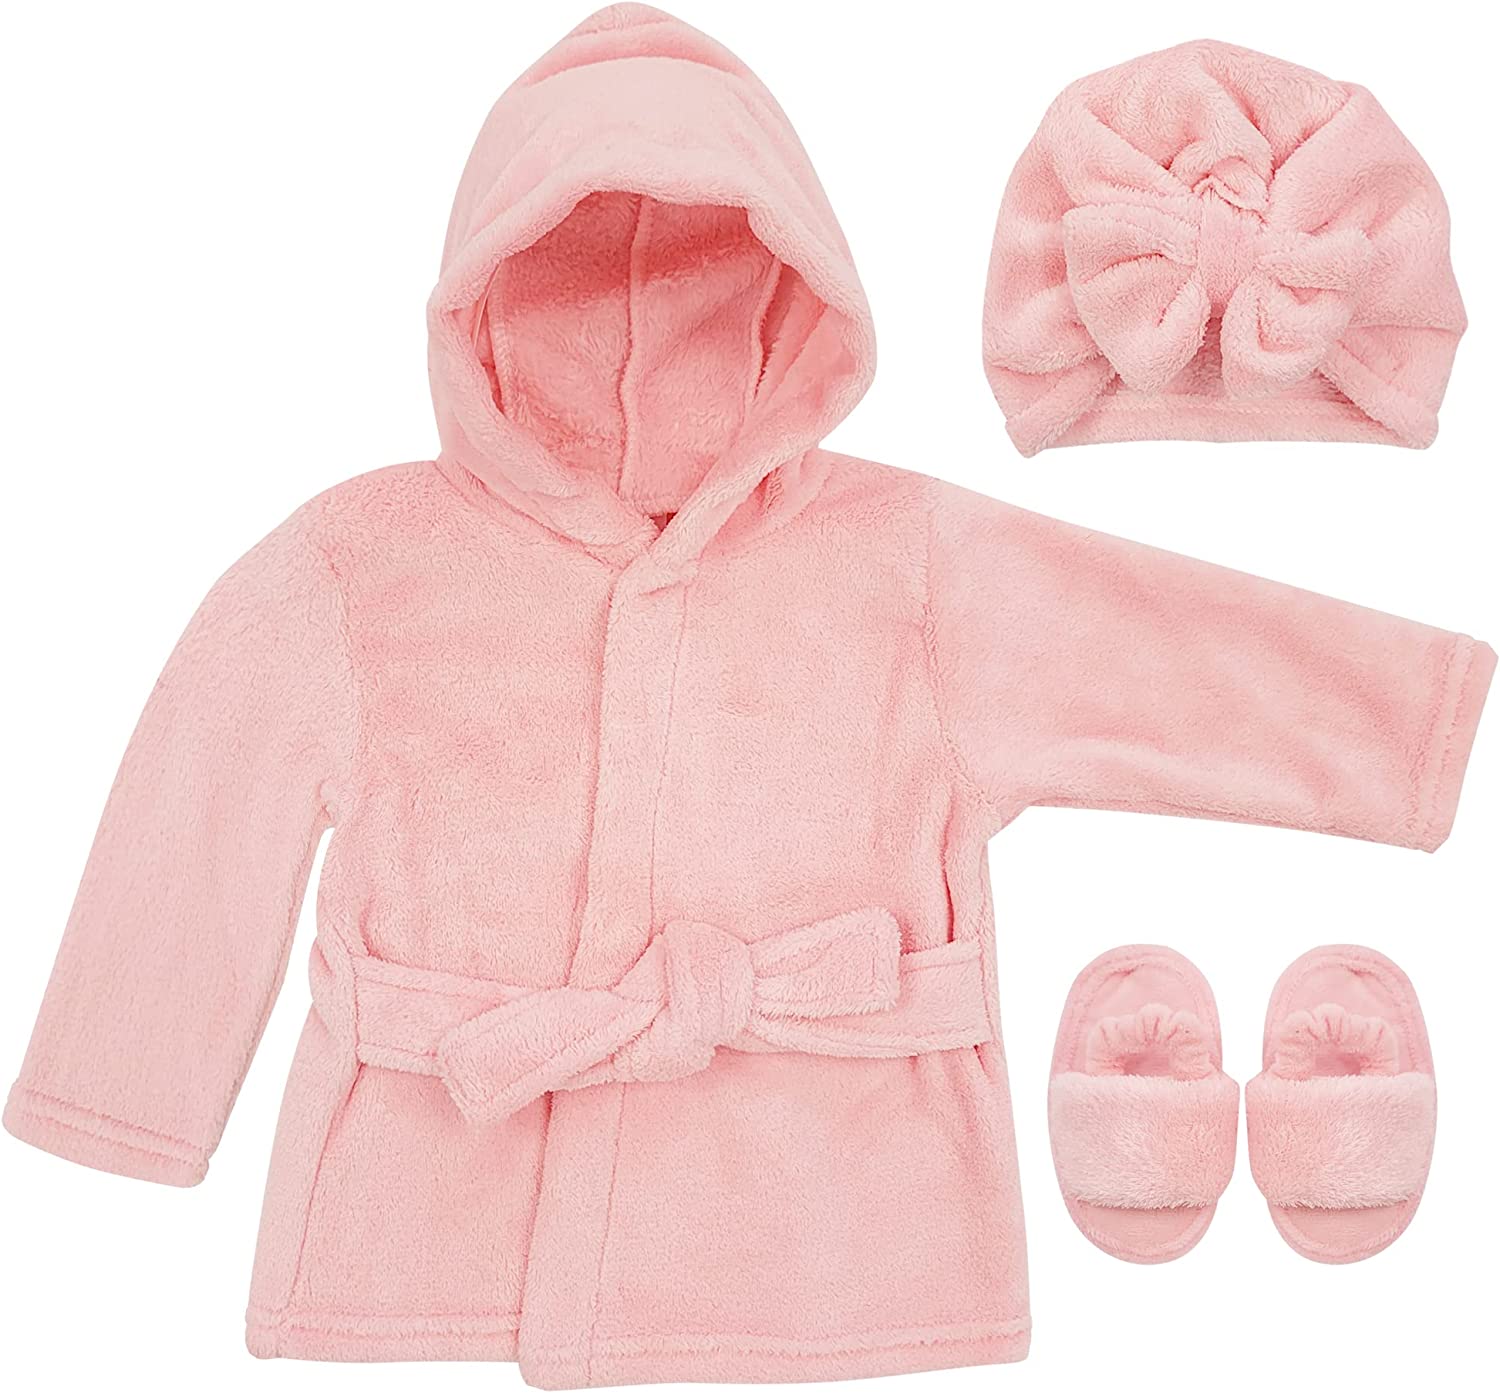  Channing & Yates - Premium Baby Robe - Toddler Robe